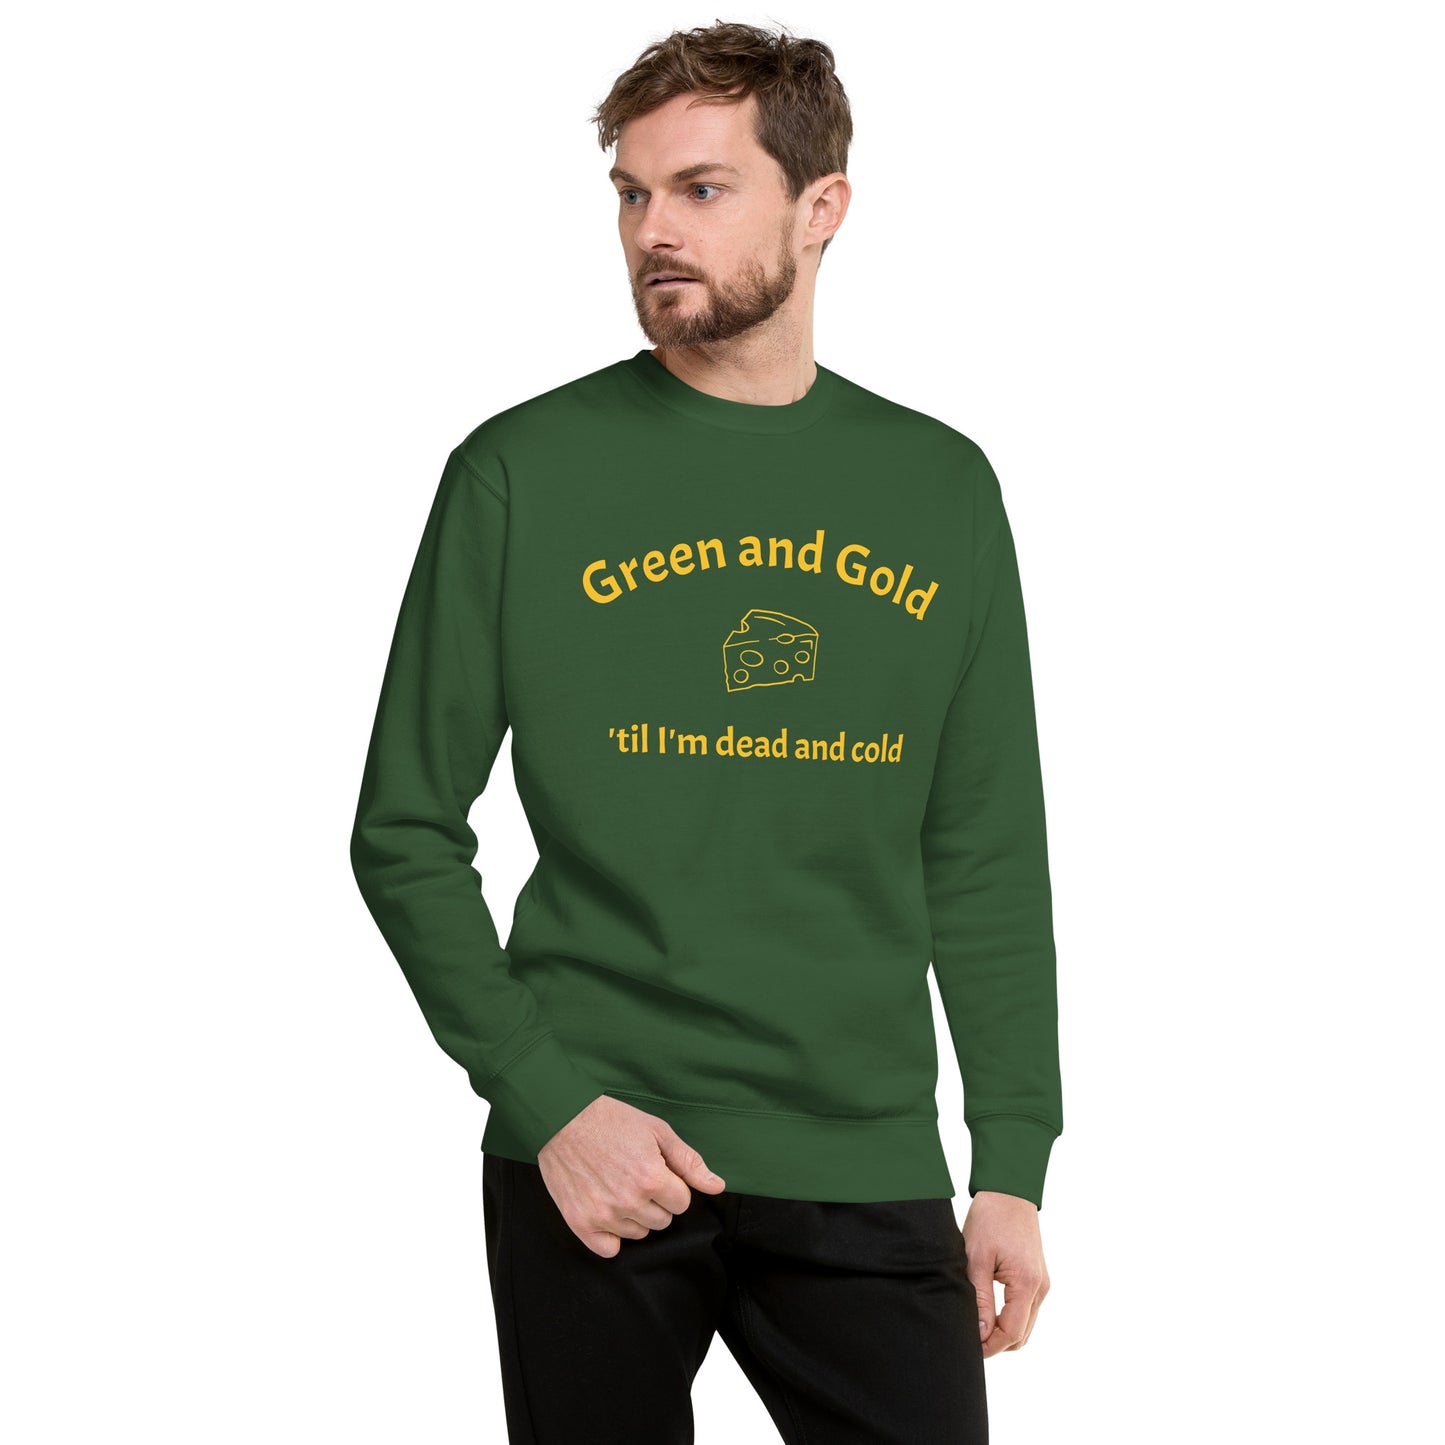 Green and Gold Premium Sweatshirt